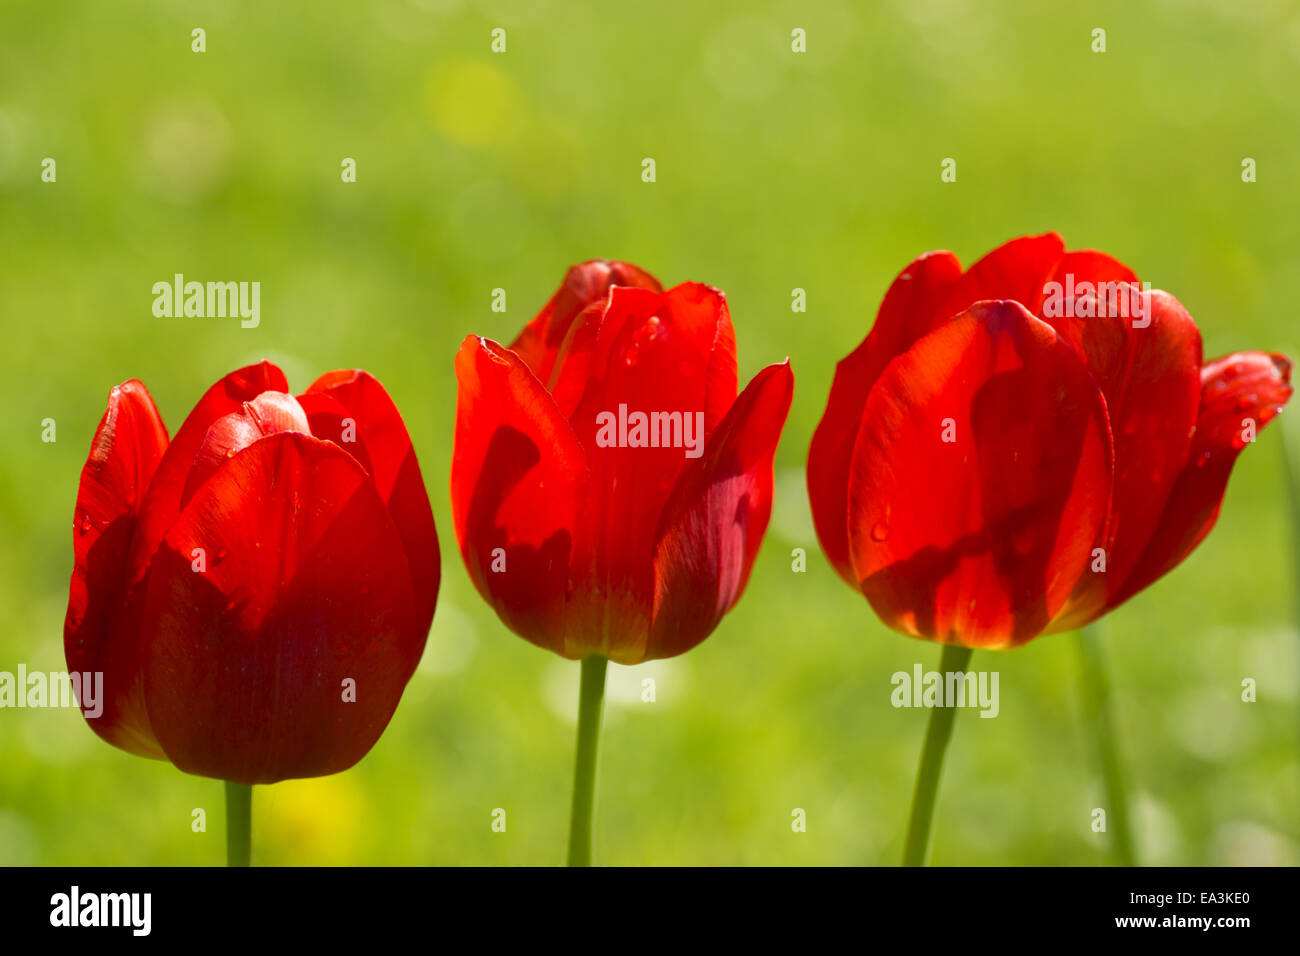 3 red tulips Stock Photo